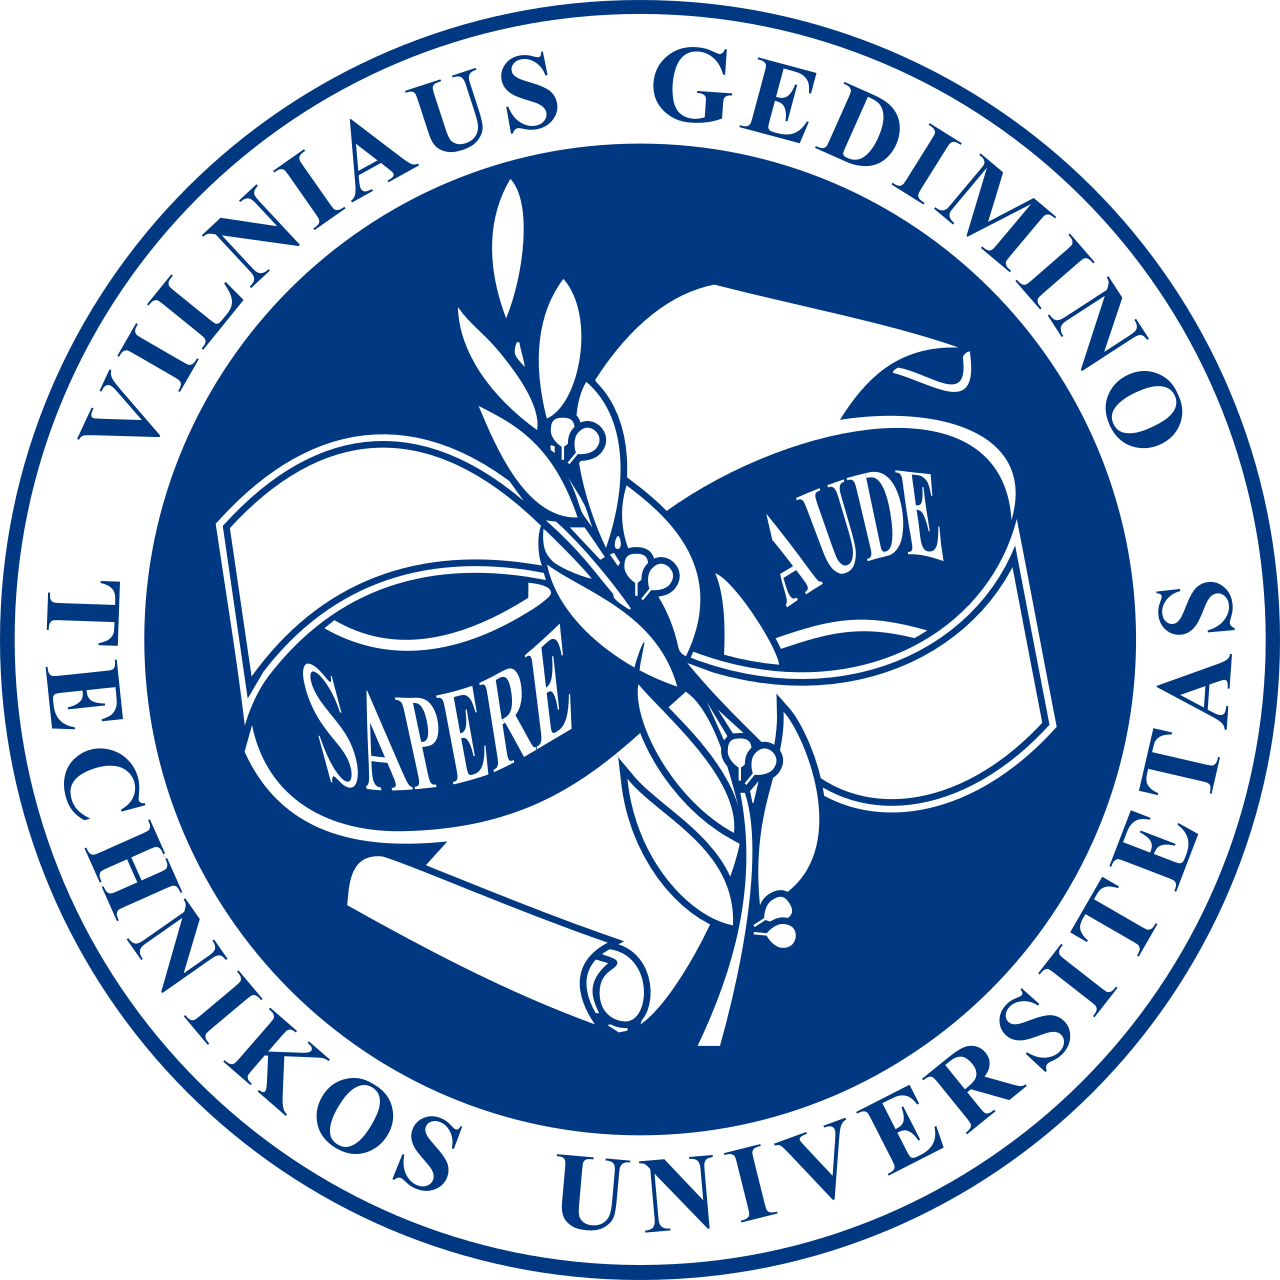 Vilnius Gediminas Technical University (VGTU)